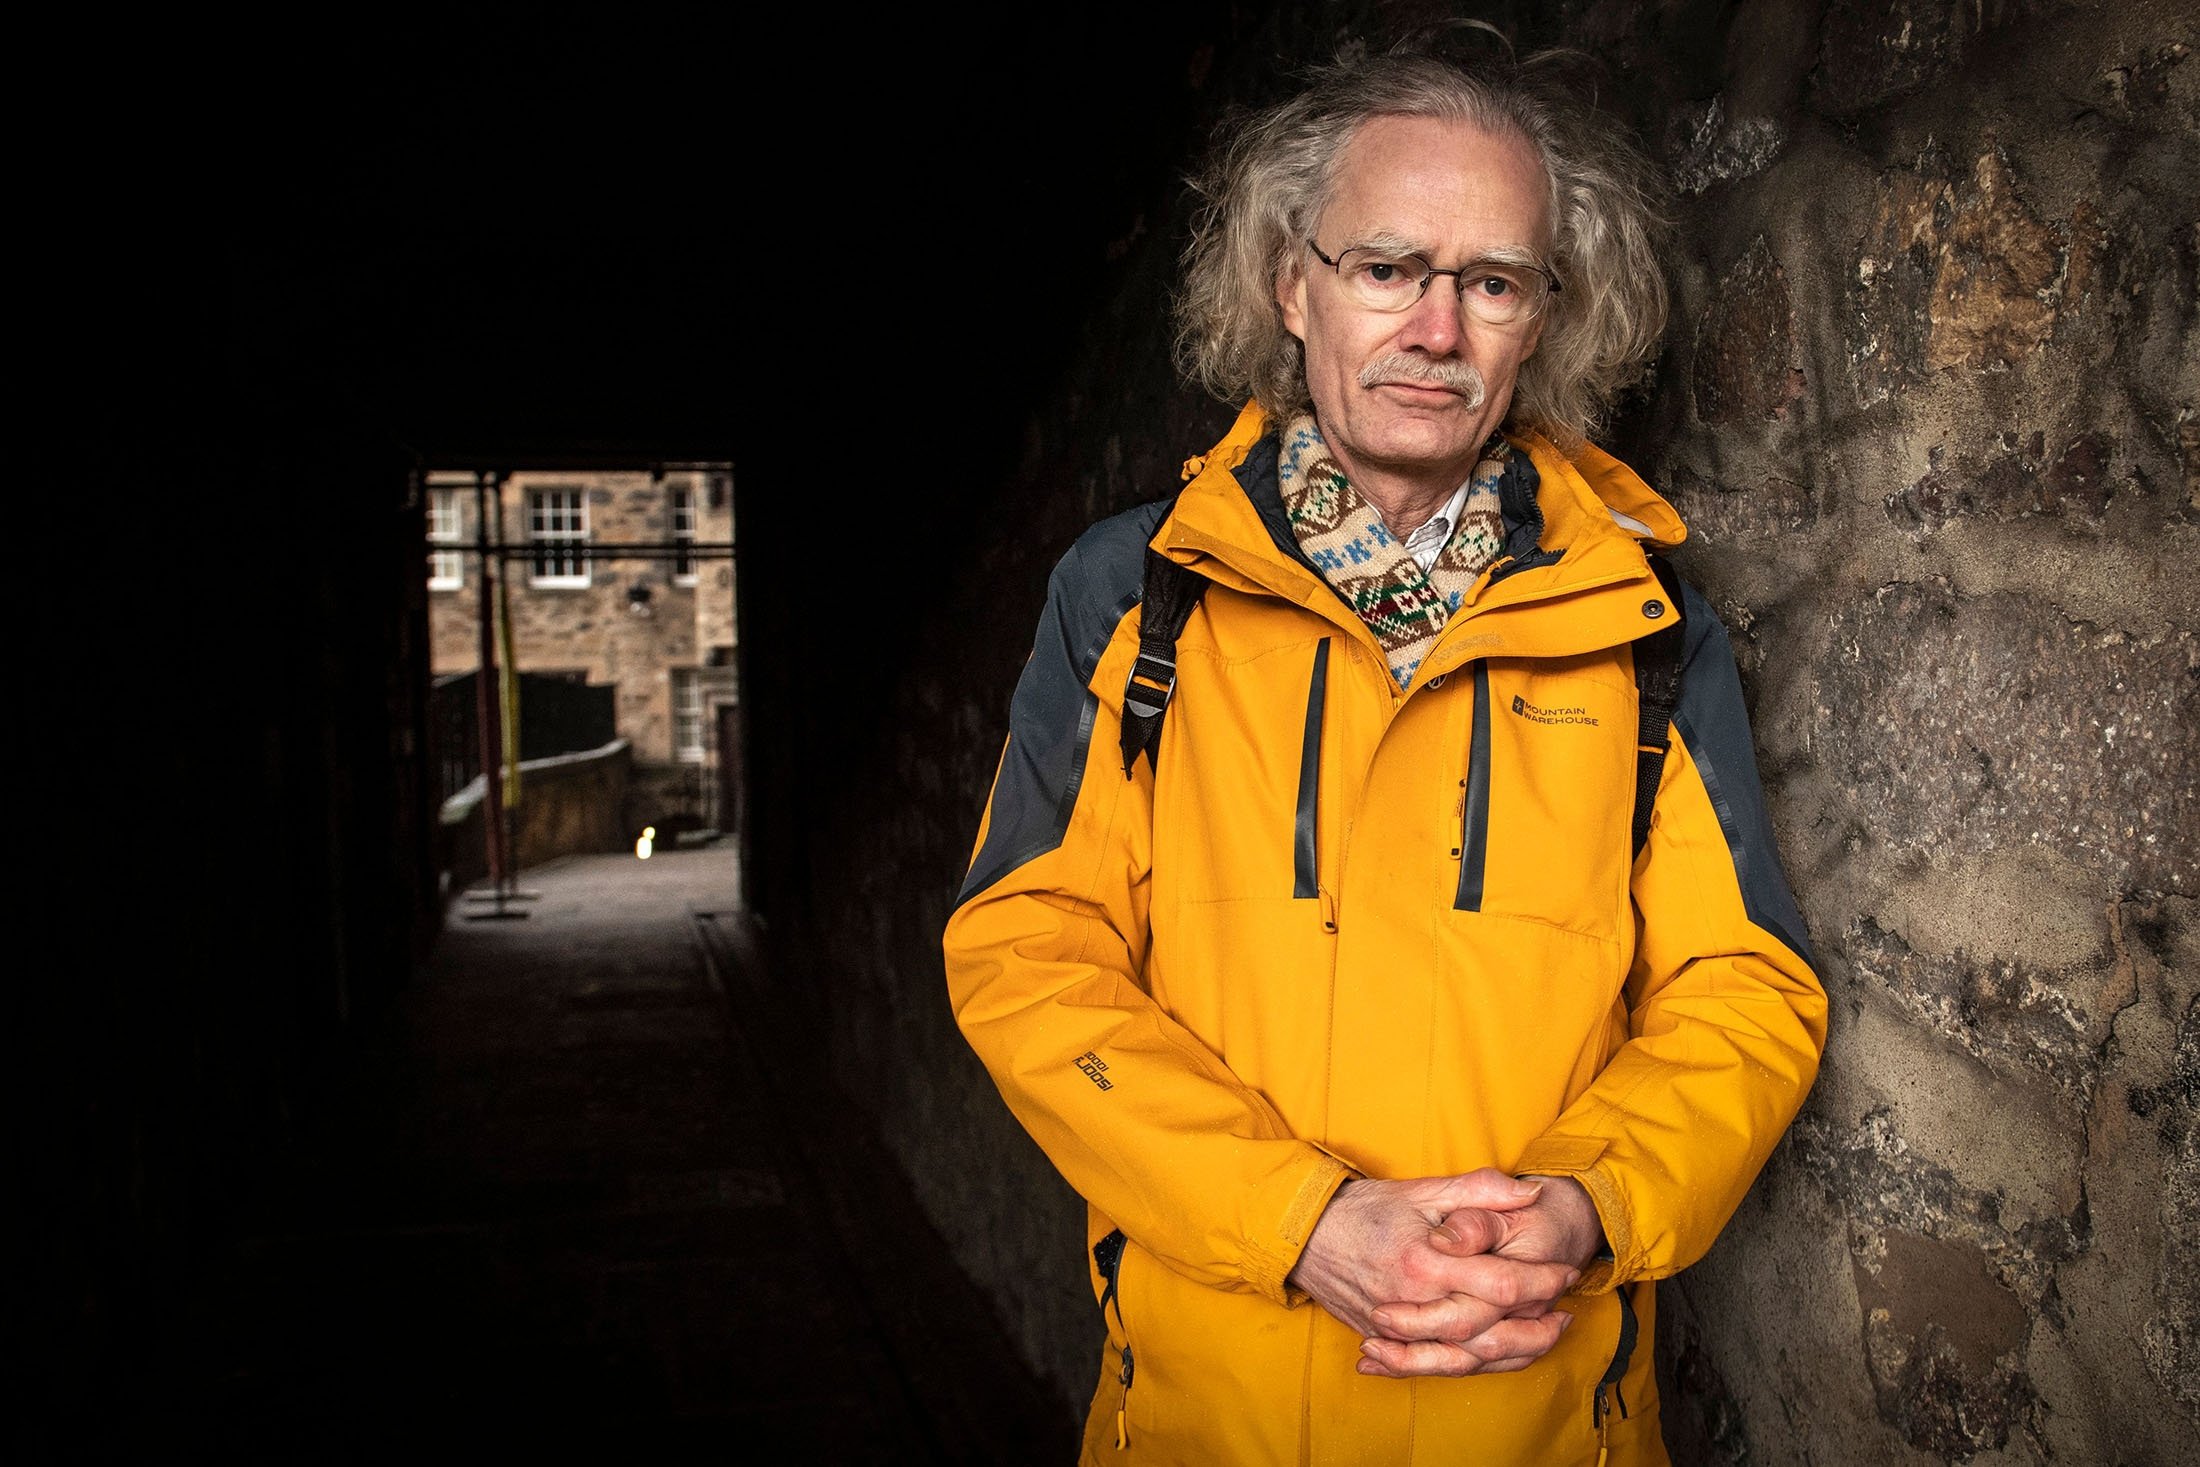 Emeritus professor of history at the University Of Edinburgh Julian Goodare, 64, poses for pictures on the Royal Mile, in Edinburgh, Scotland, Feb. 4, 2022. (AFP Photo)